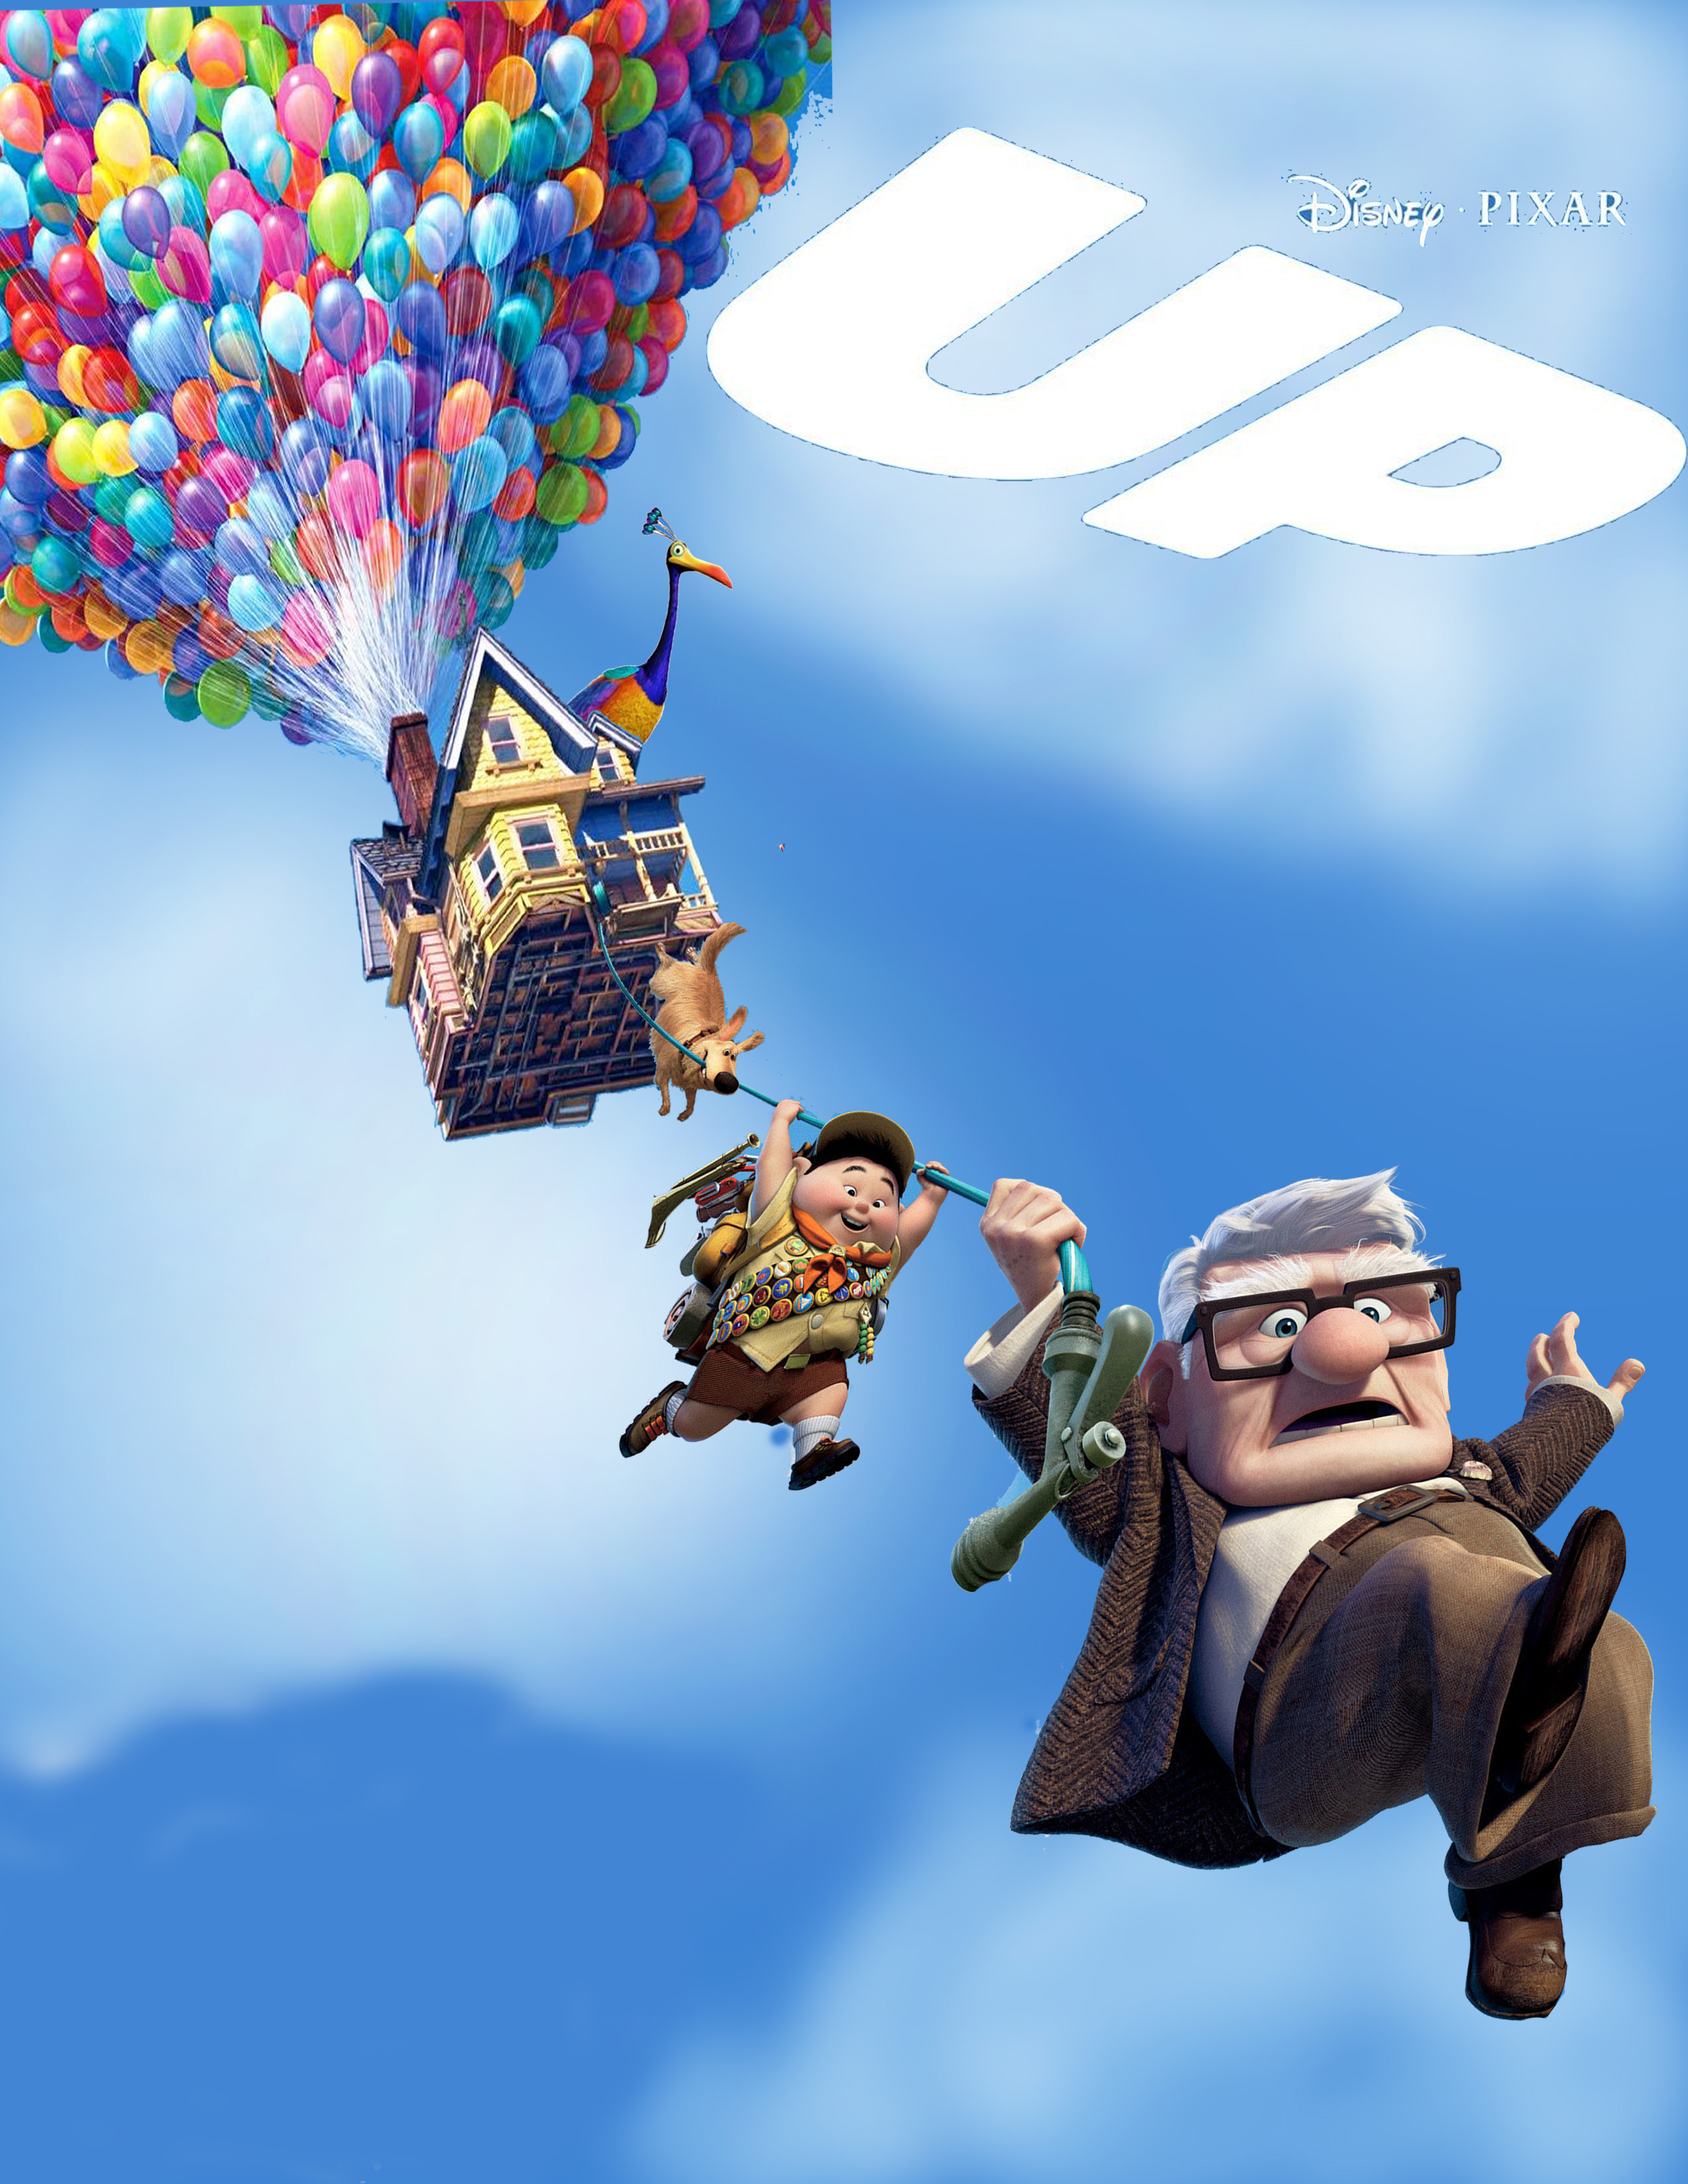 Pixar Animation Studios' Up showcases Pixar's great storytelling.